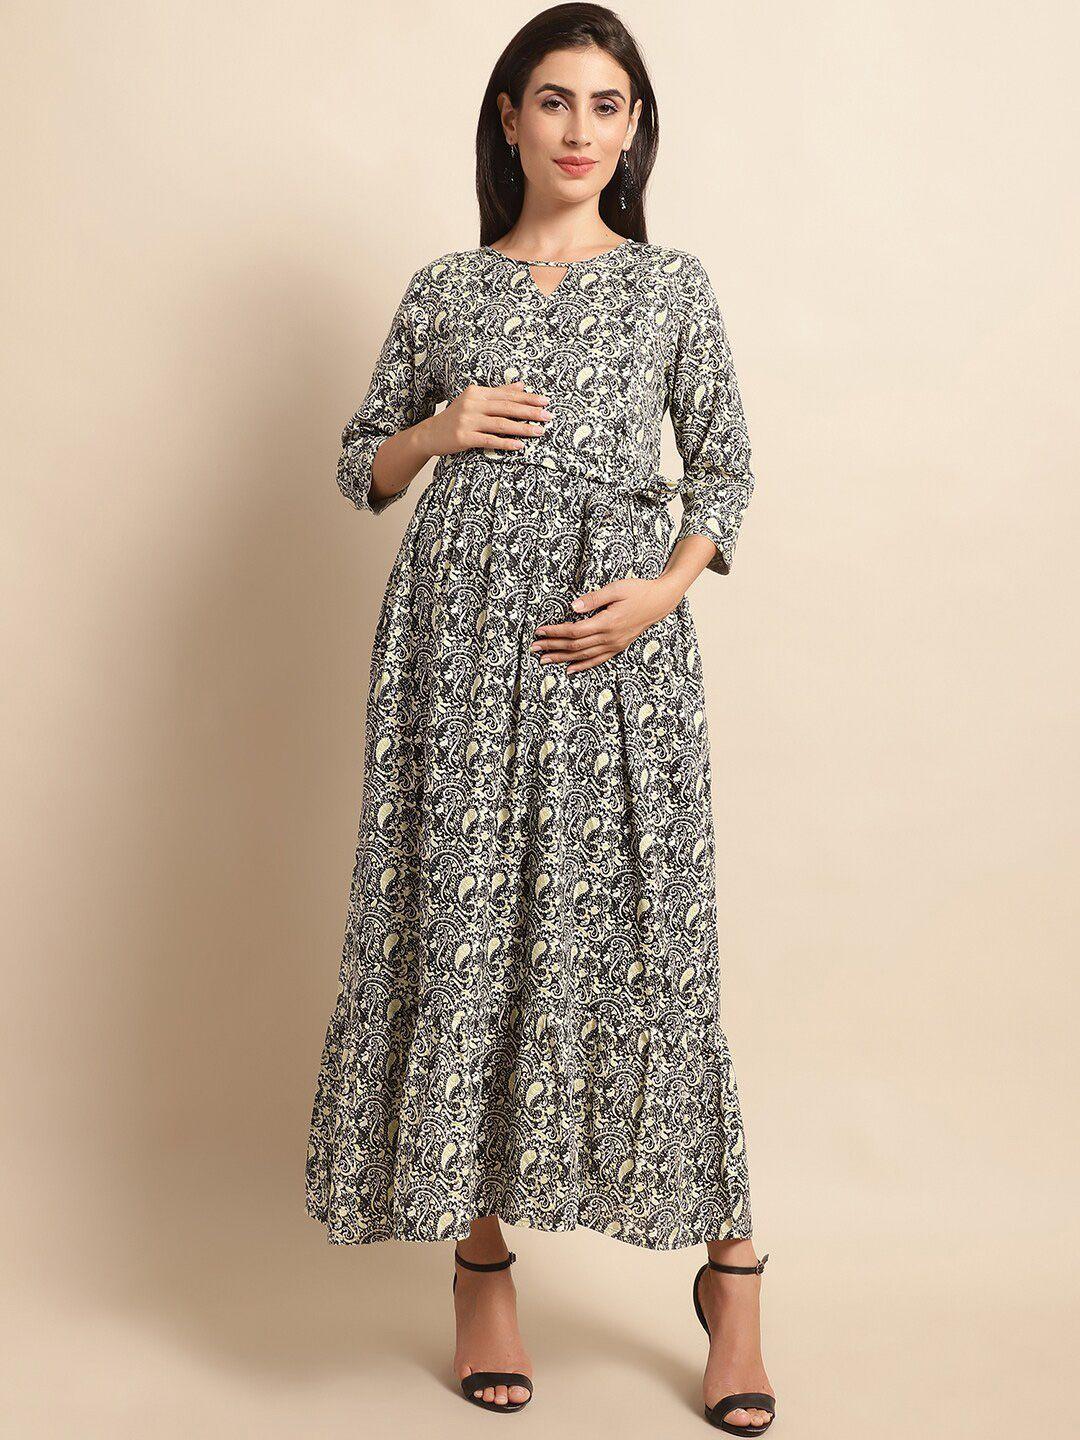 frempy black floral print maternity maxi dress